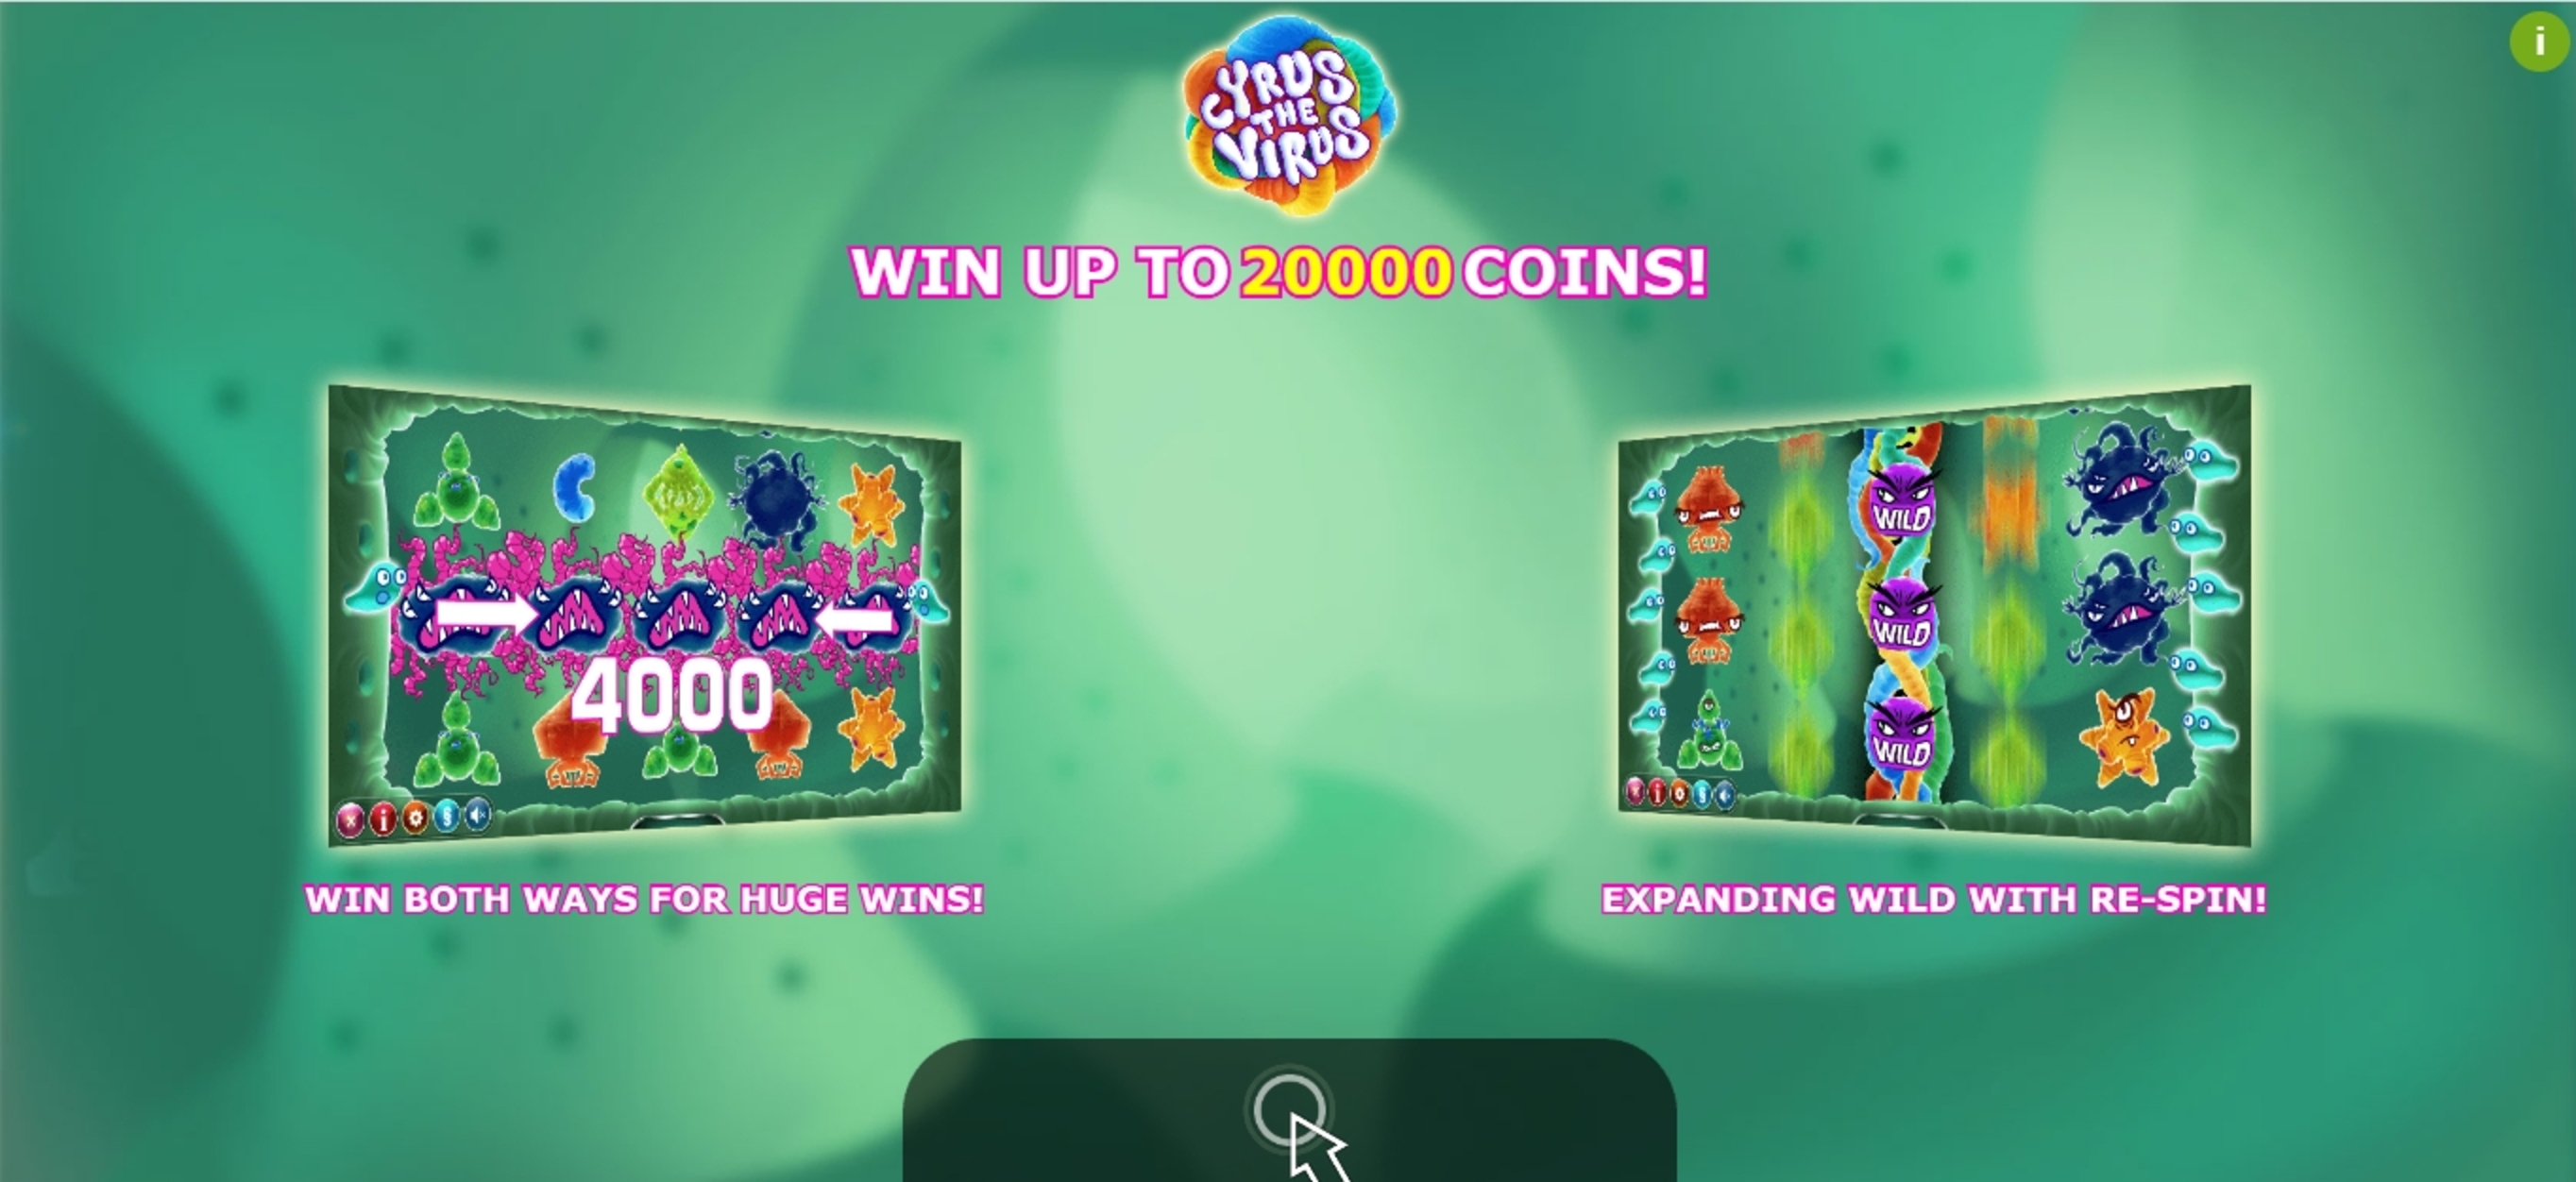 Play Cyrus the Virus Free Casino Slot Game by Yggdrasil Gaming